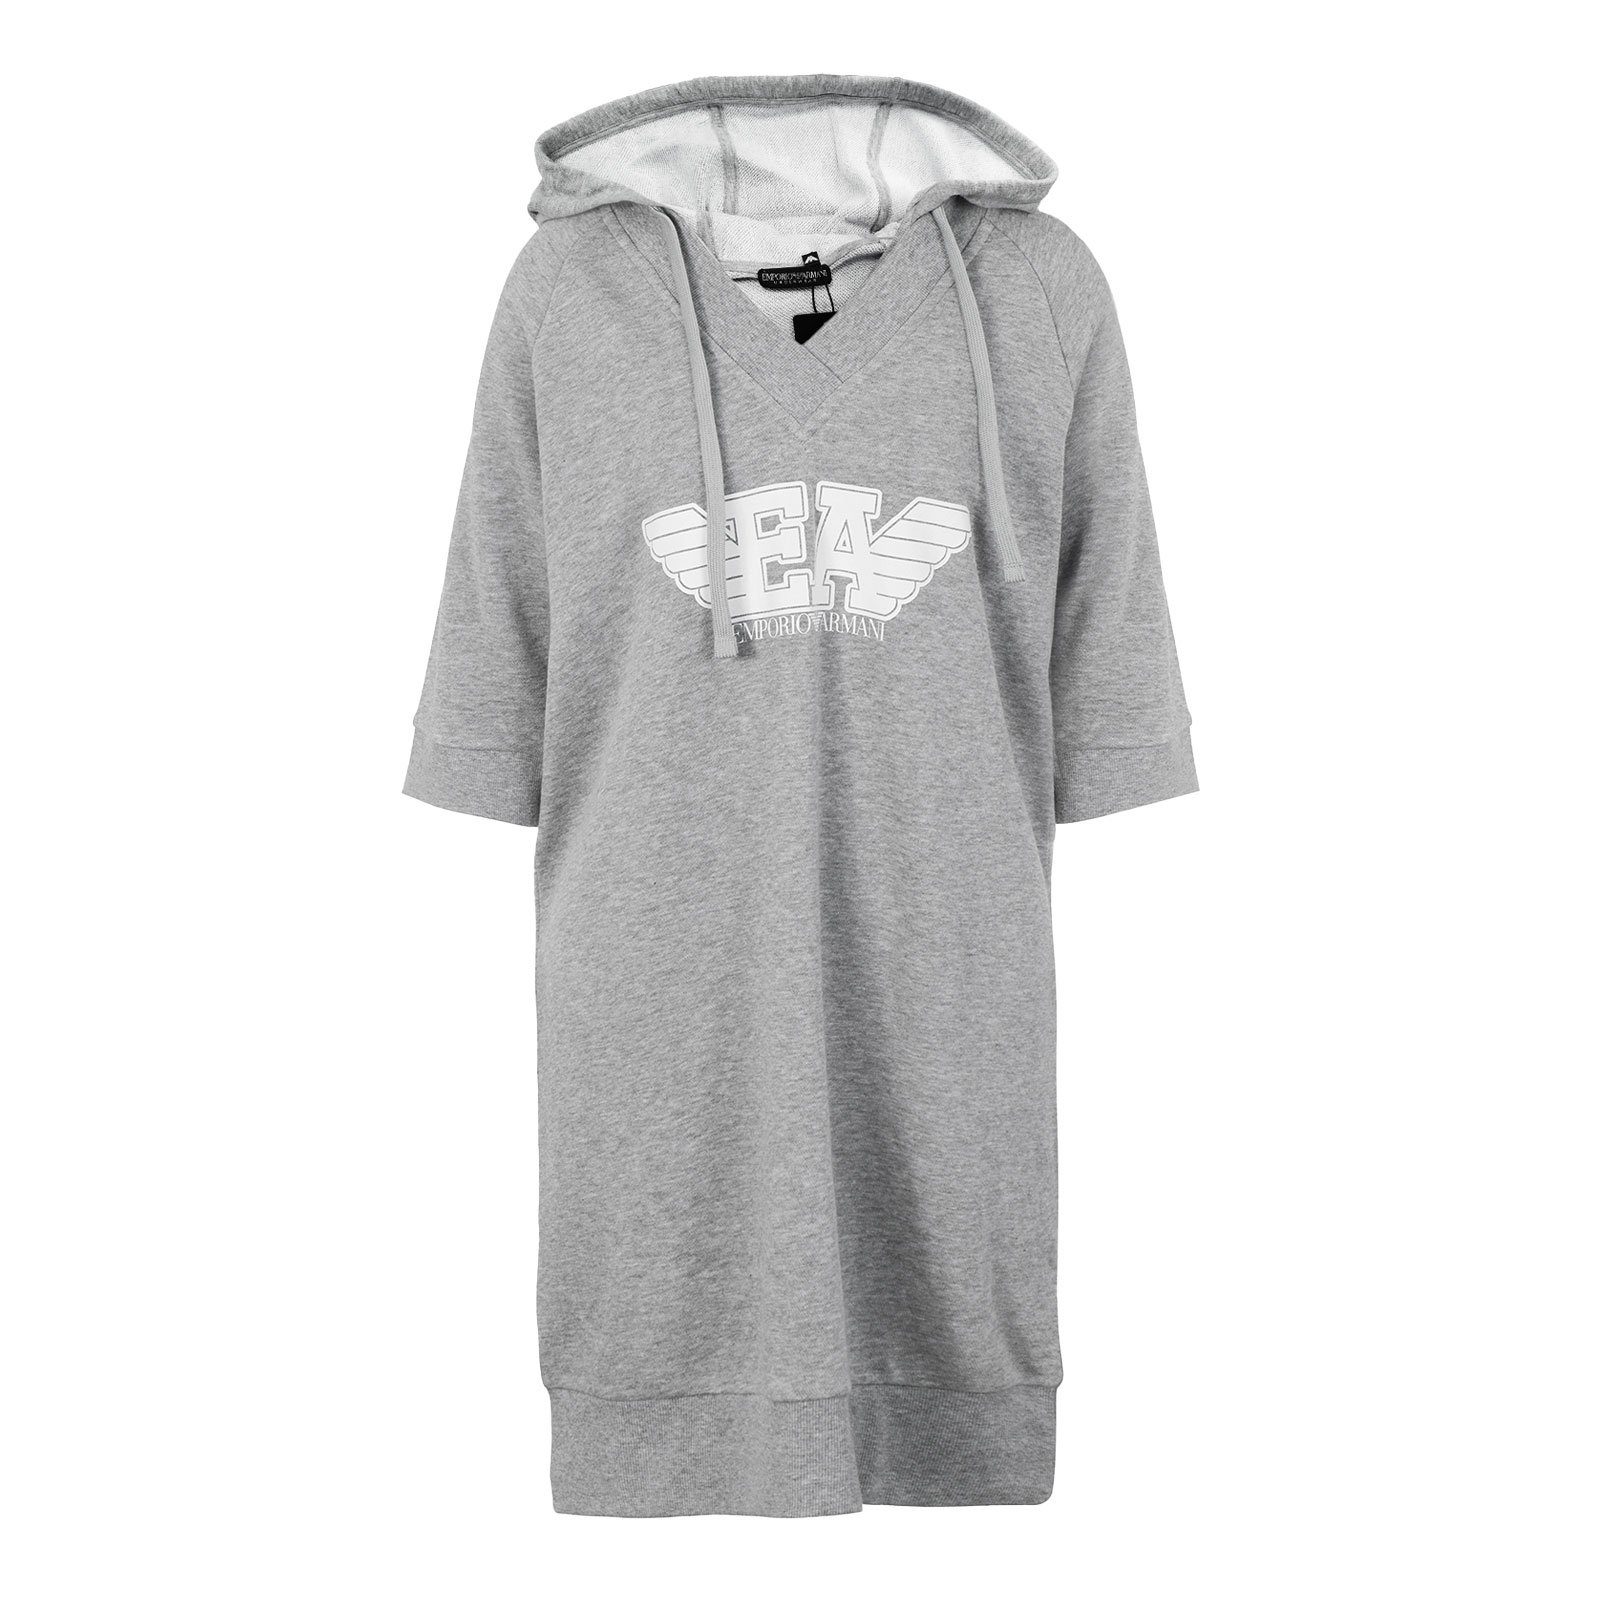 Emporio Armani Nachthemd Night Dress with Hood mit großem Logo vorn 03748 light grey melange